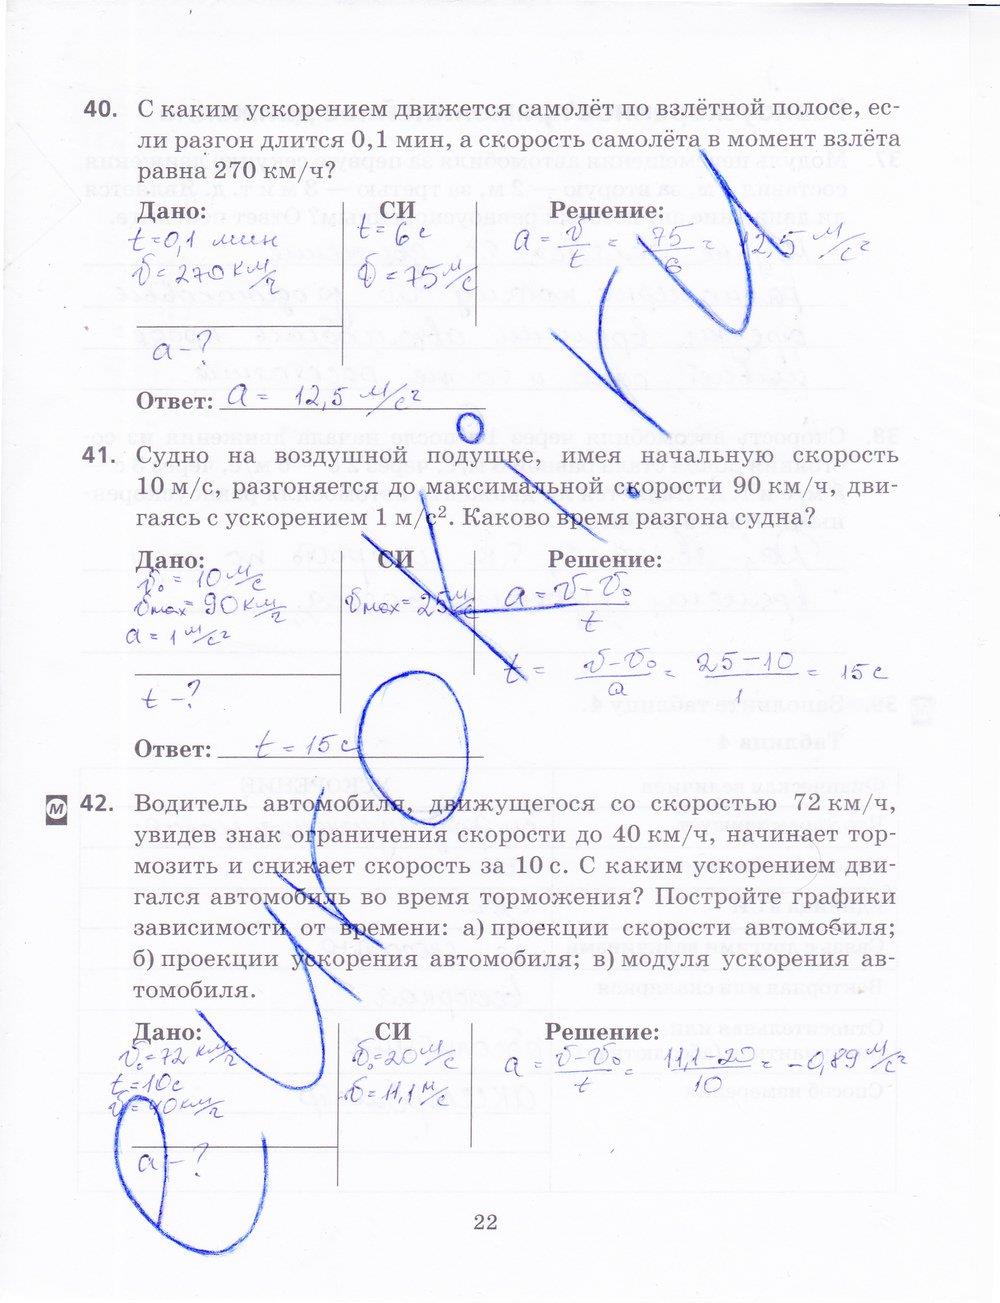 гдз 9 класс рабочая тетрадь страница 22 физика Пурышева, Важеевская, Чаругин